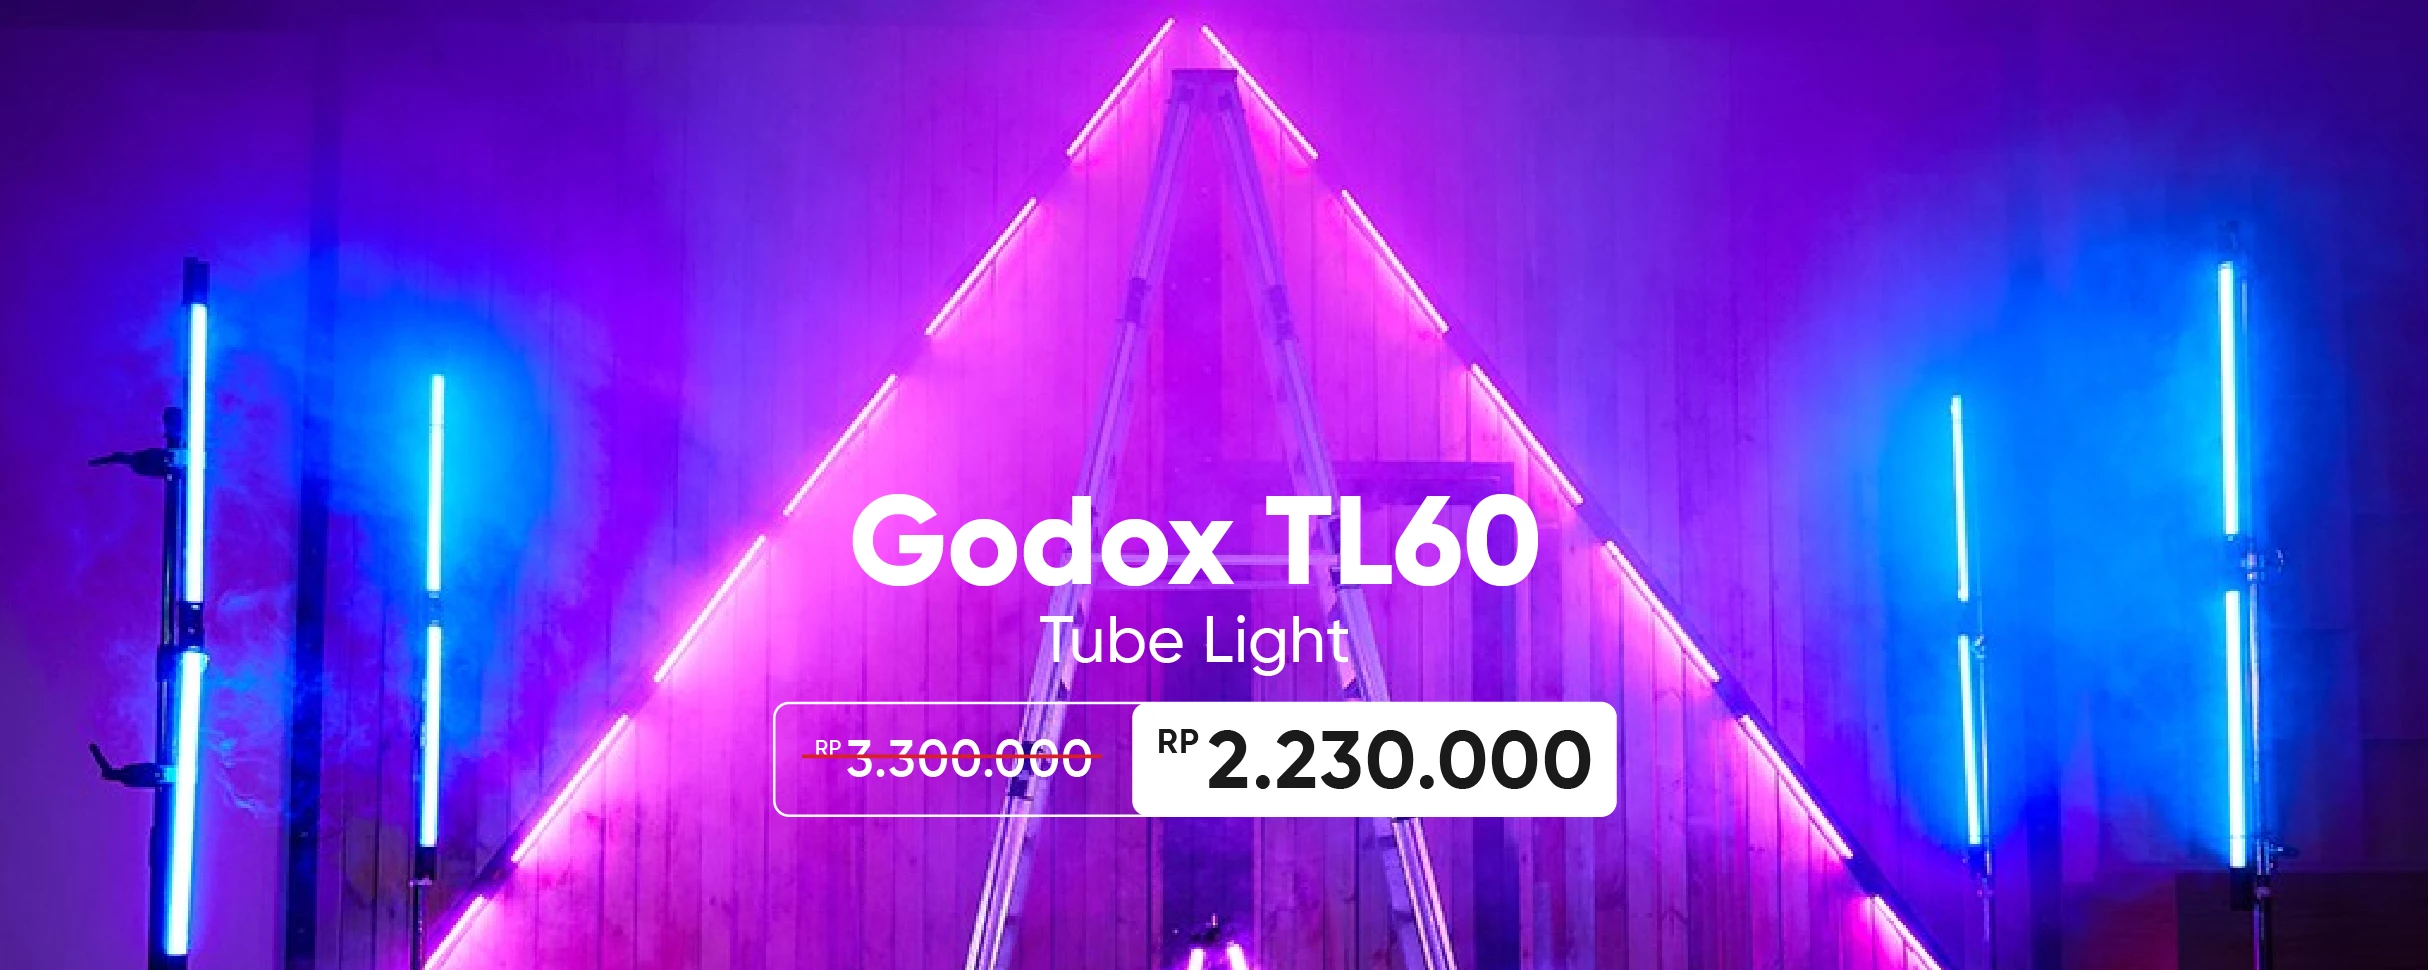 Godox TL60 Tube Light